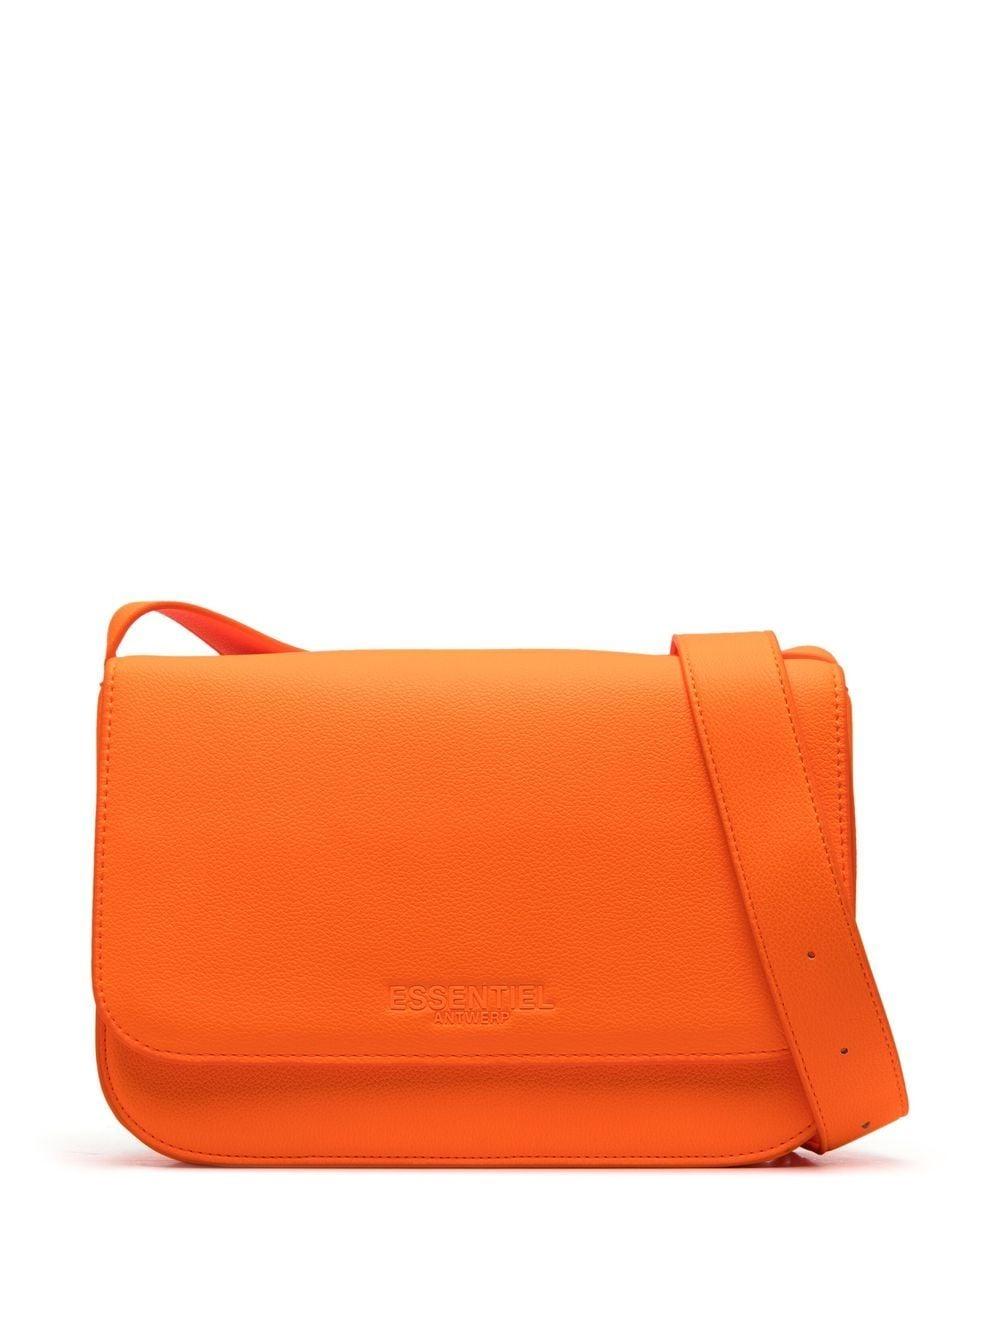 Essentiel Antwerp Detroy Neon Faux-leather Shoulder Bag in Orange | Lyst